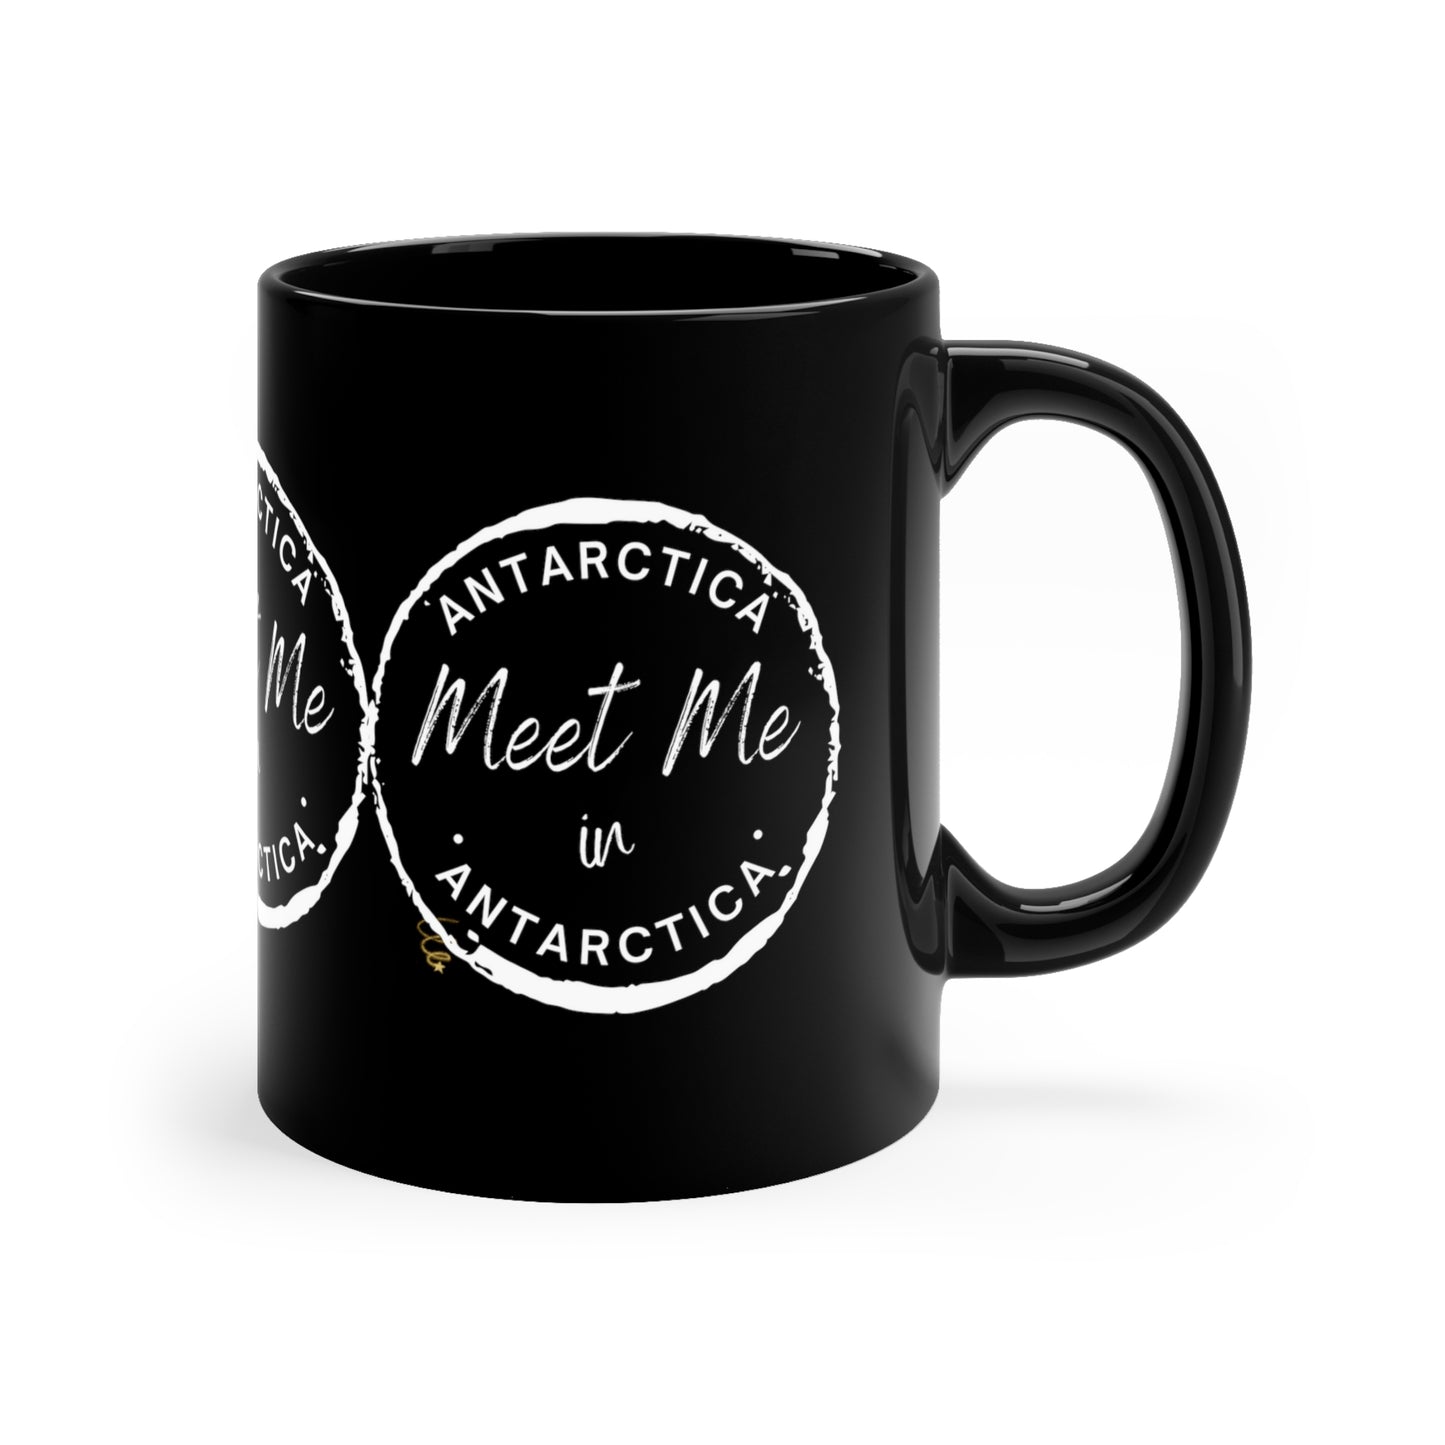 Flat Earth Mug Meet Me In Antarctica Black Flossy 11 Oz Mug Flat Earther's Gift